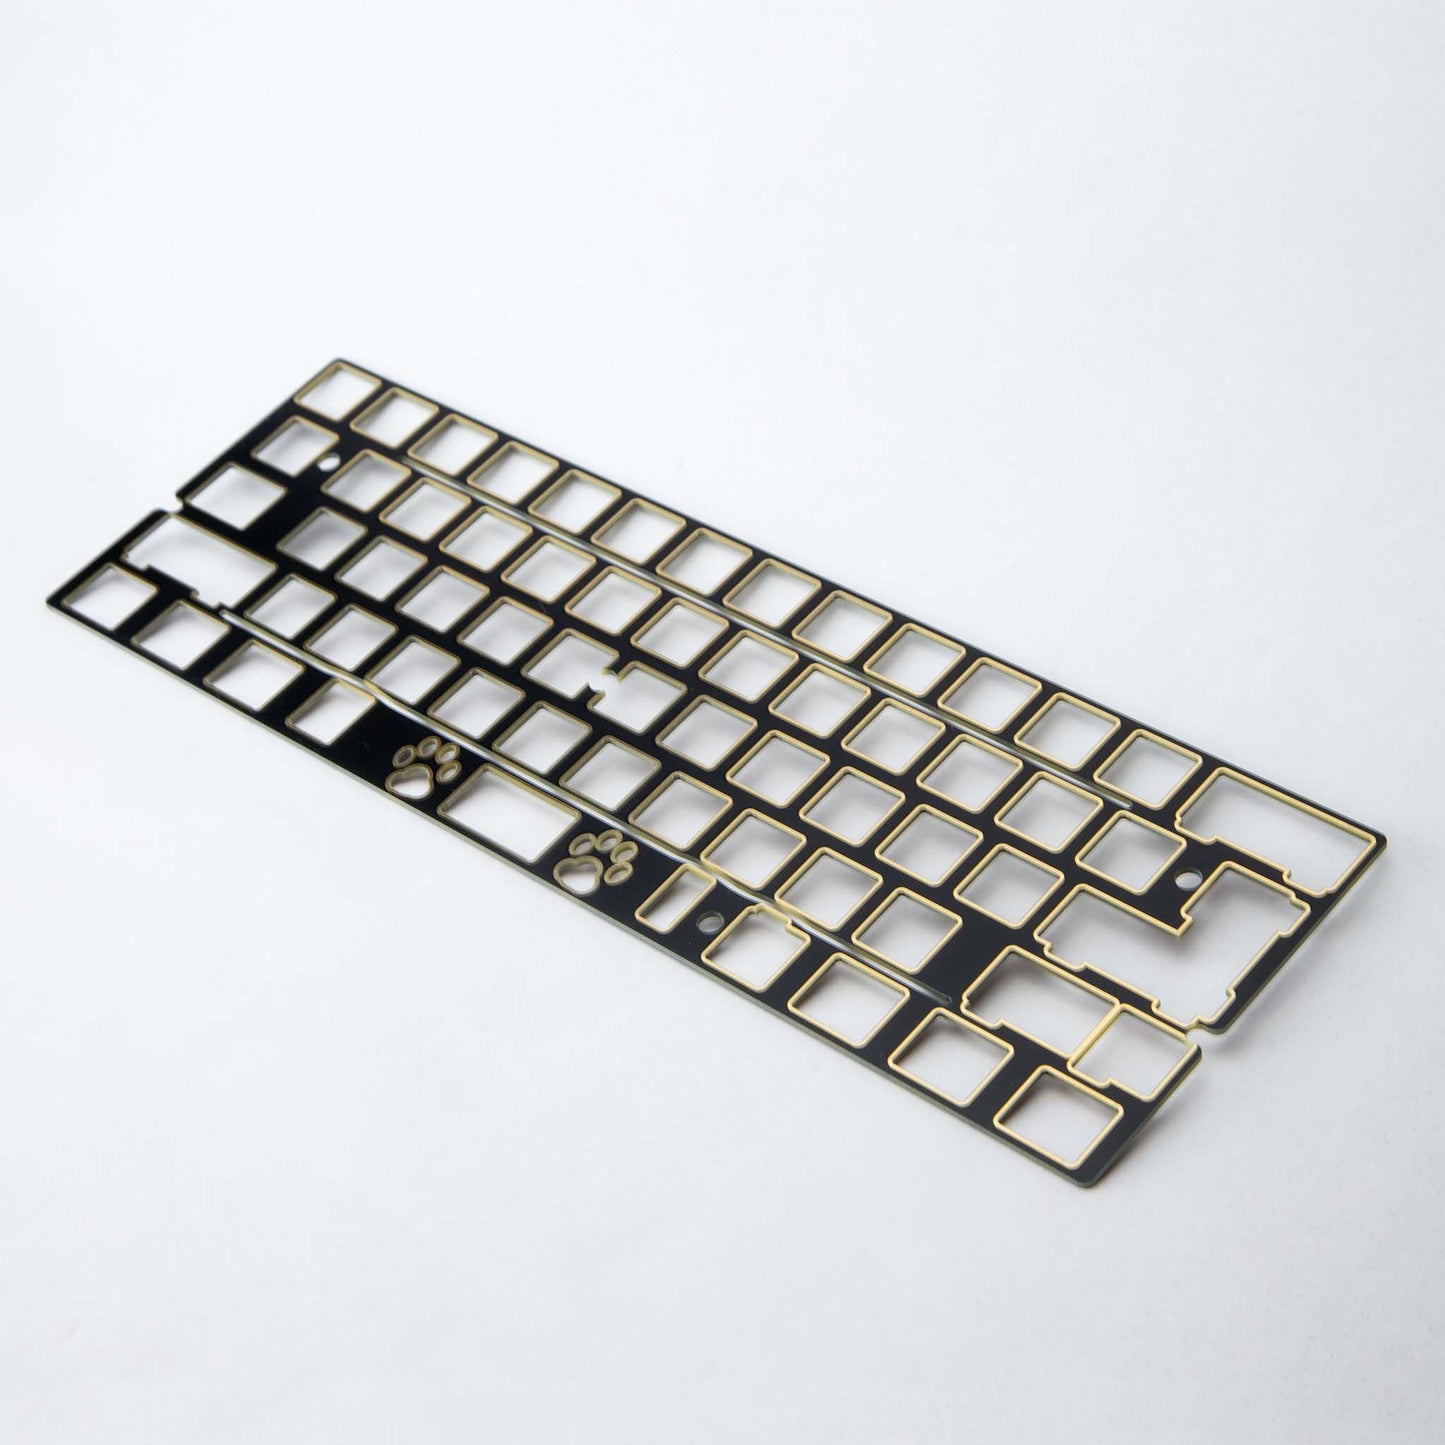 KeebCats UK Denis Plate - Premium Tray Mount 60% Keyboard Plate Black FR4 (Gold Trim)